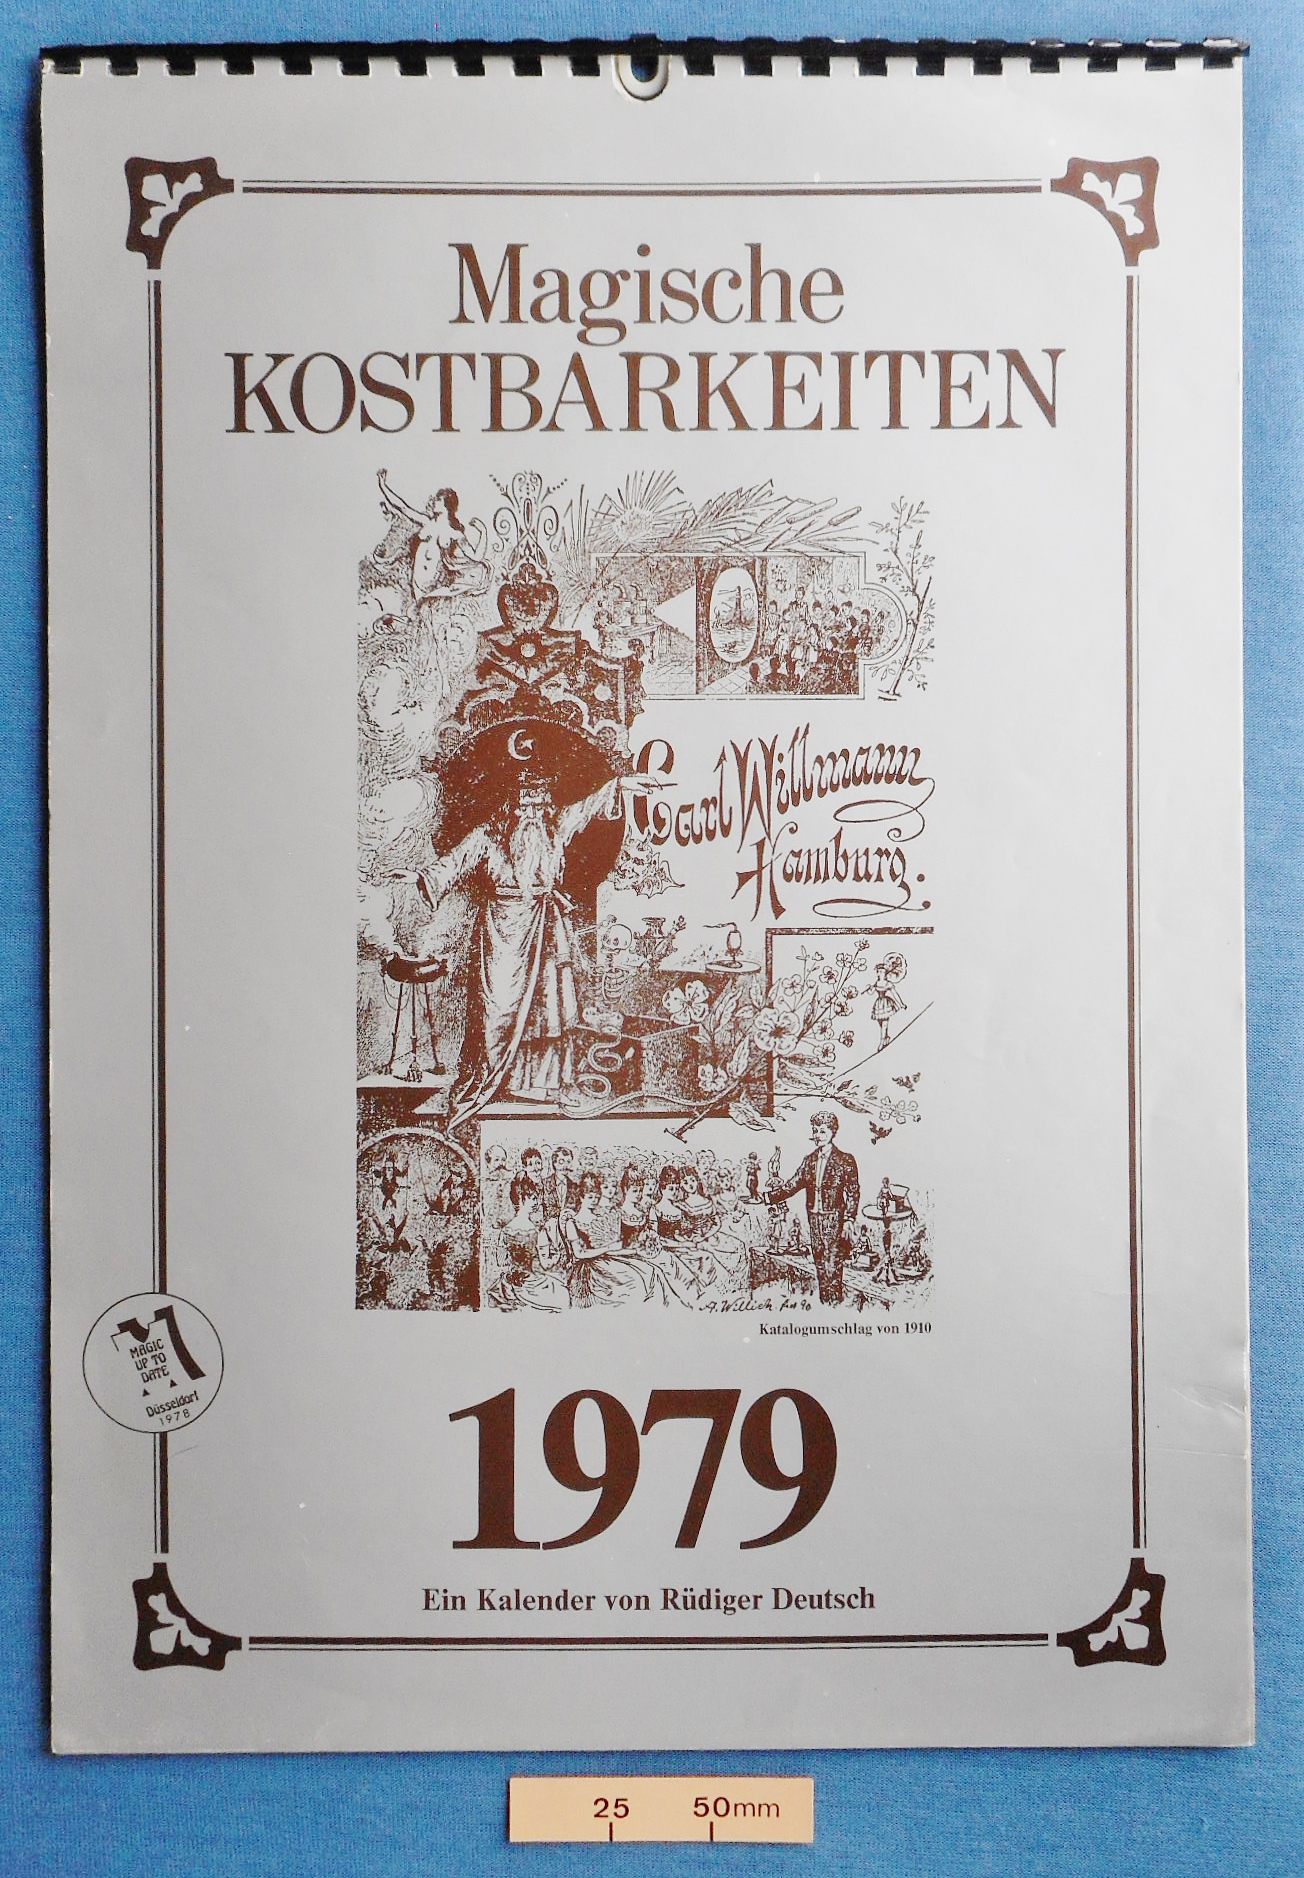 1979 Magische Kostbarkeiten (Magical Treasures) Calendar by Rüdiger Deutsch